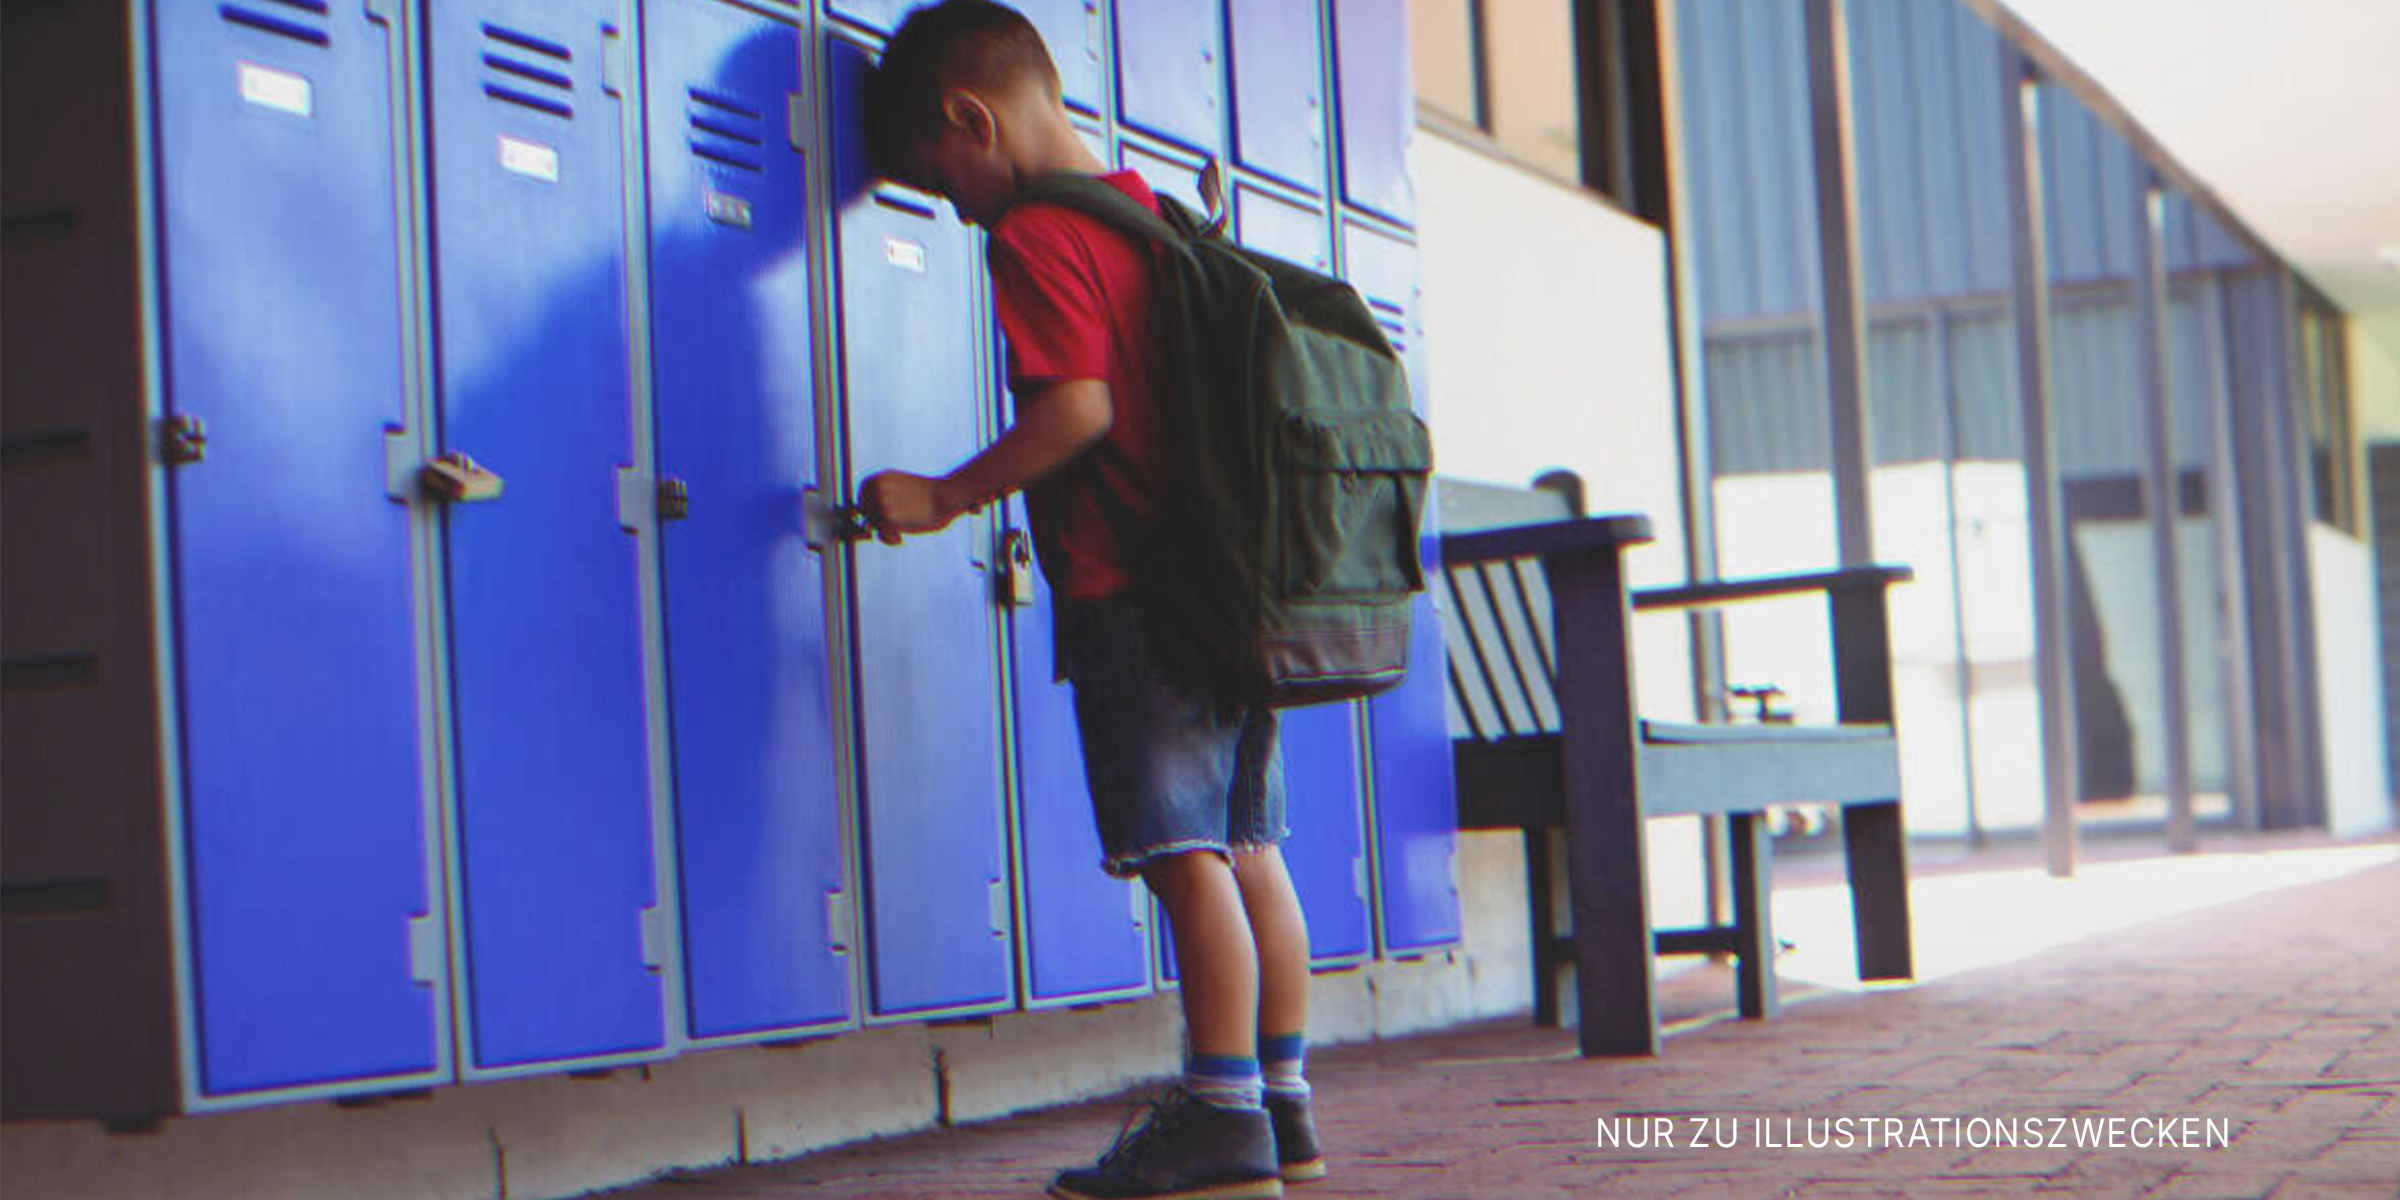 Junge in der Nähe des Schulspinds. | Quelle: Shutterstock